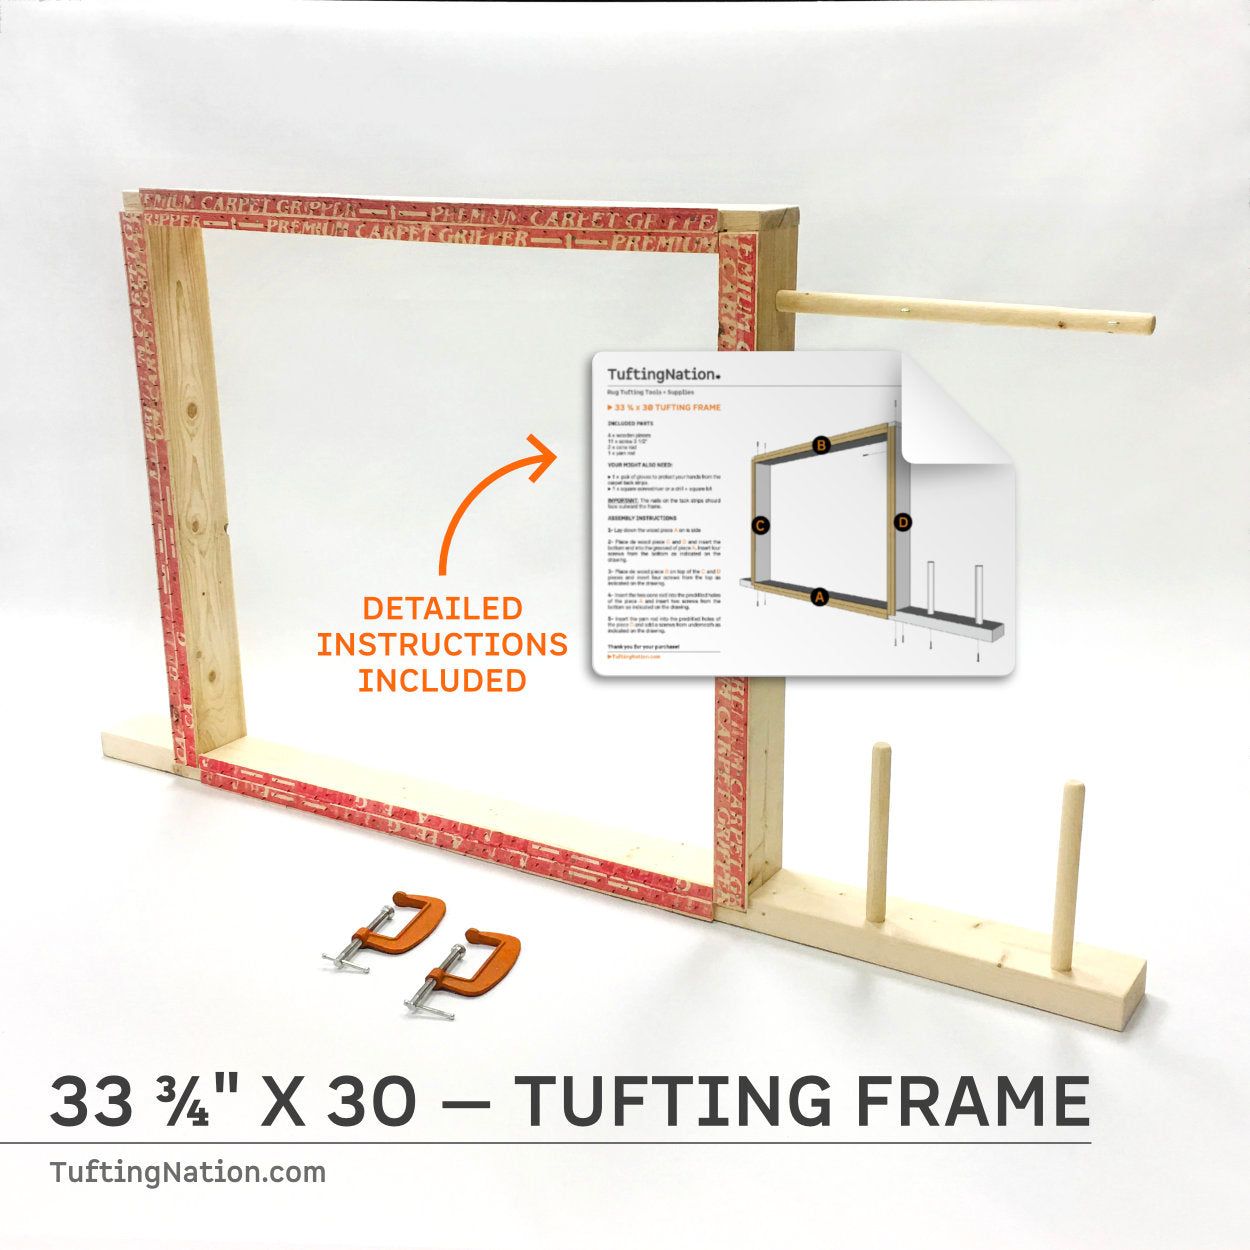 Best Tufting Frame for Beginners, Medium Size Wooden Table Top Rug Making Frame | TuftingNation.com